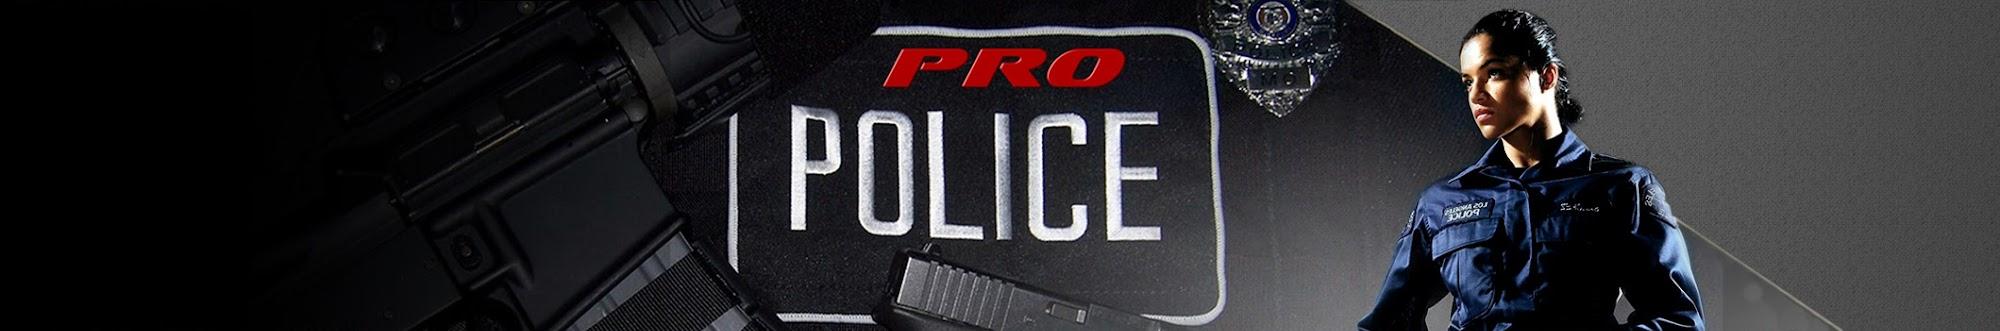 PRO-Police